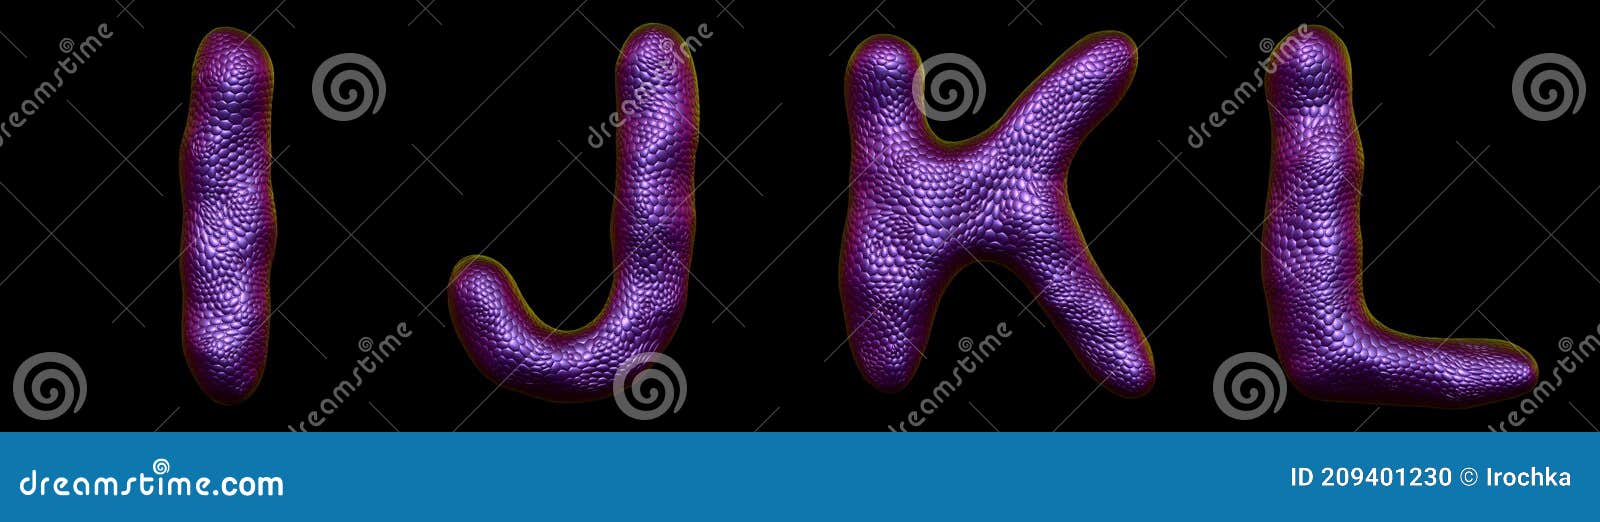 set of letters i, j, k, l made of realistic 3d render natural purple snake skin texture.